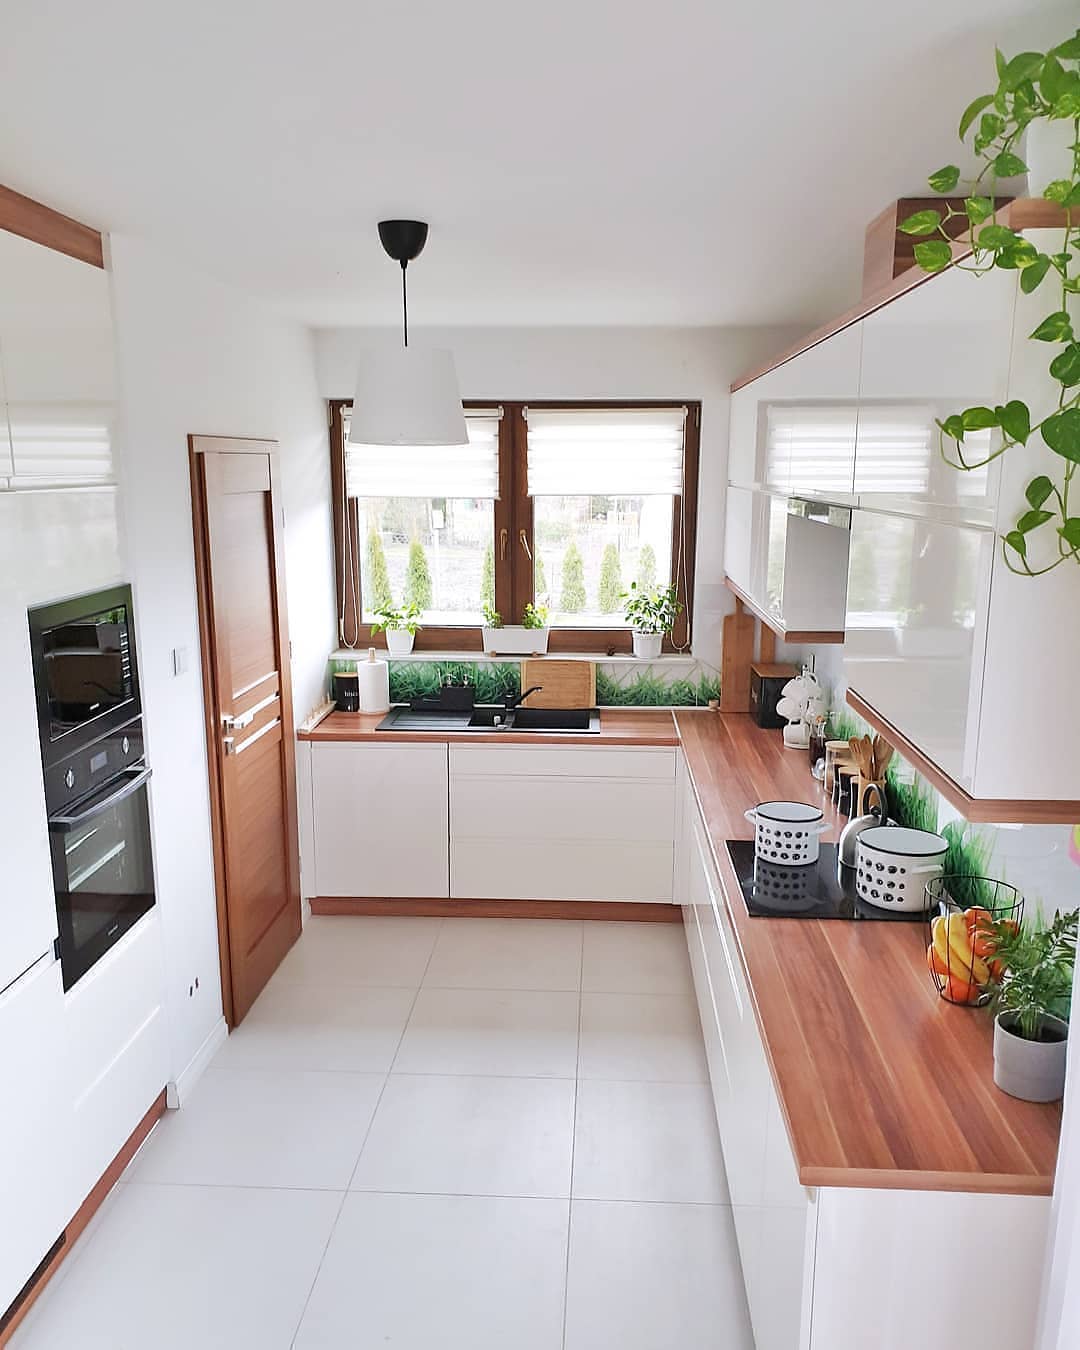 Kumpulan Inspirasi Desain Dapur Minimalis Bahan Kayu Yang Sederhana Namun Tetap Elegan Dan Minim Budget Homeshabbycom Design Home Plans